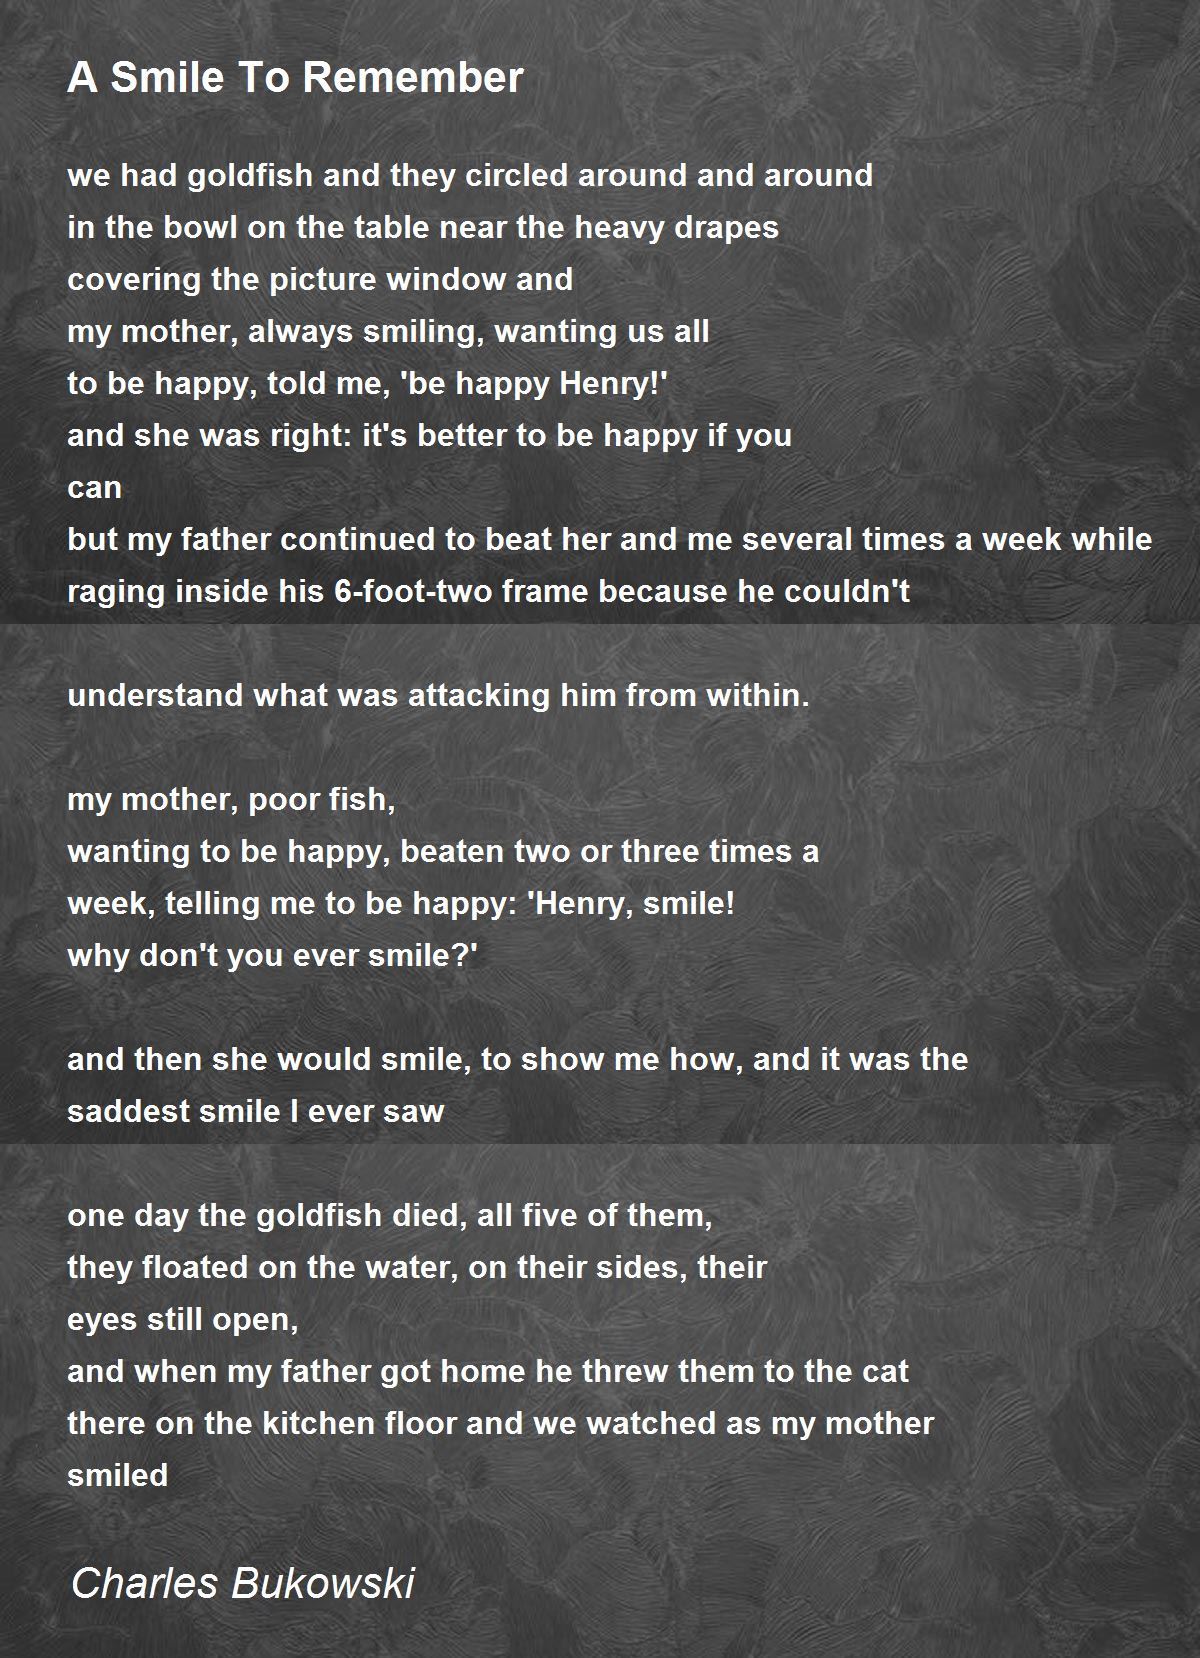 A Smile To Remember Poem by Charles Bukowski - Poem Hunter